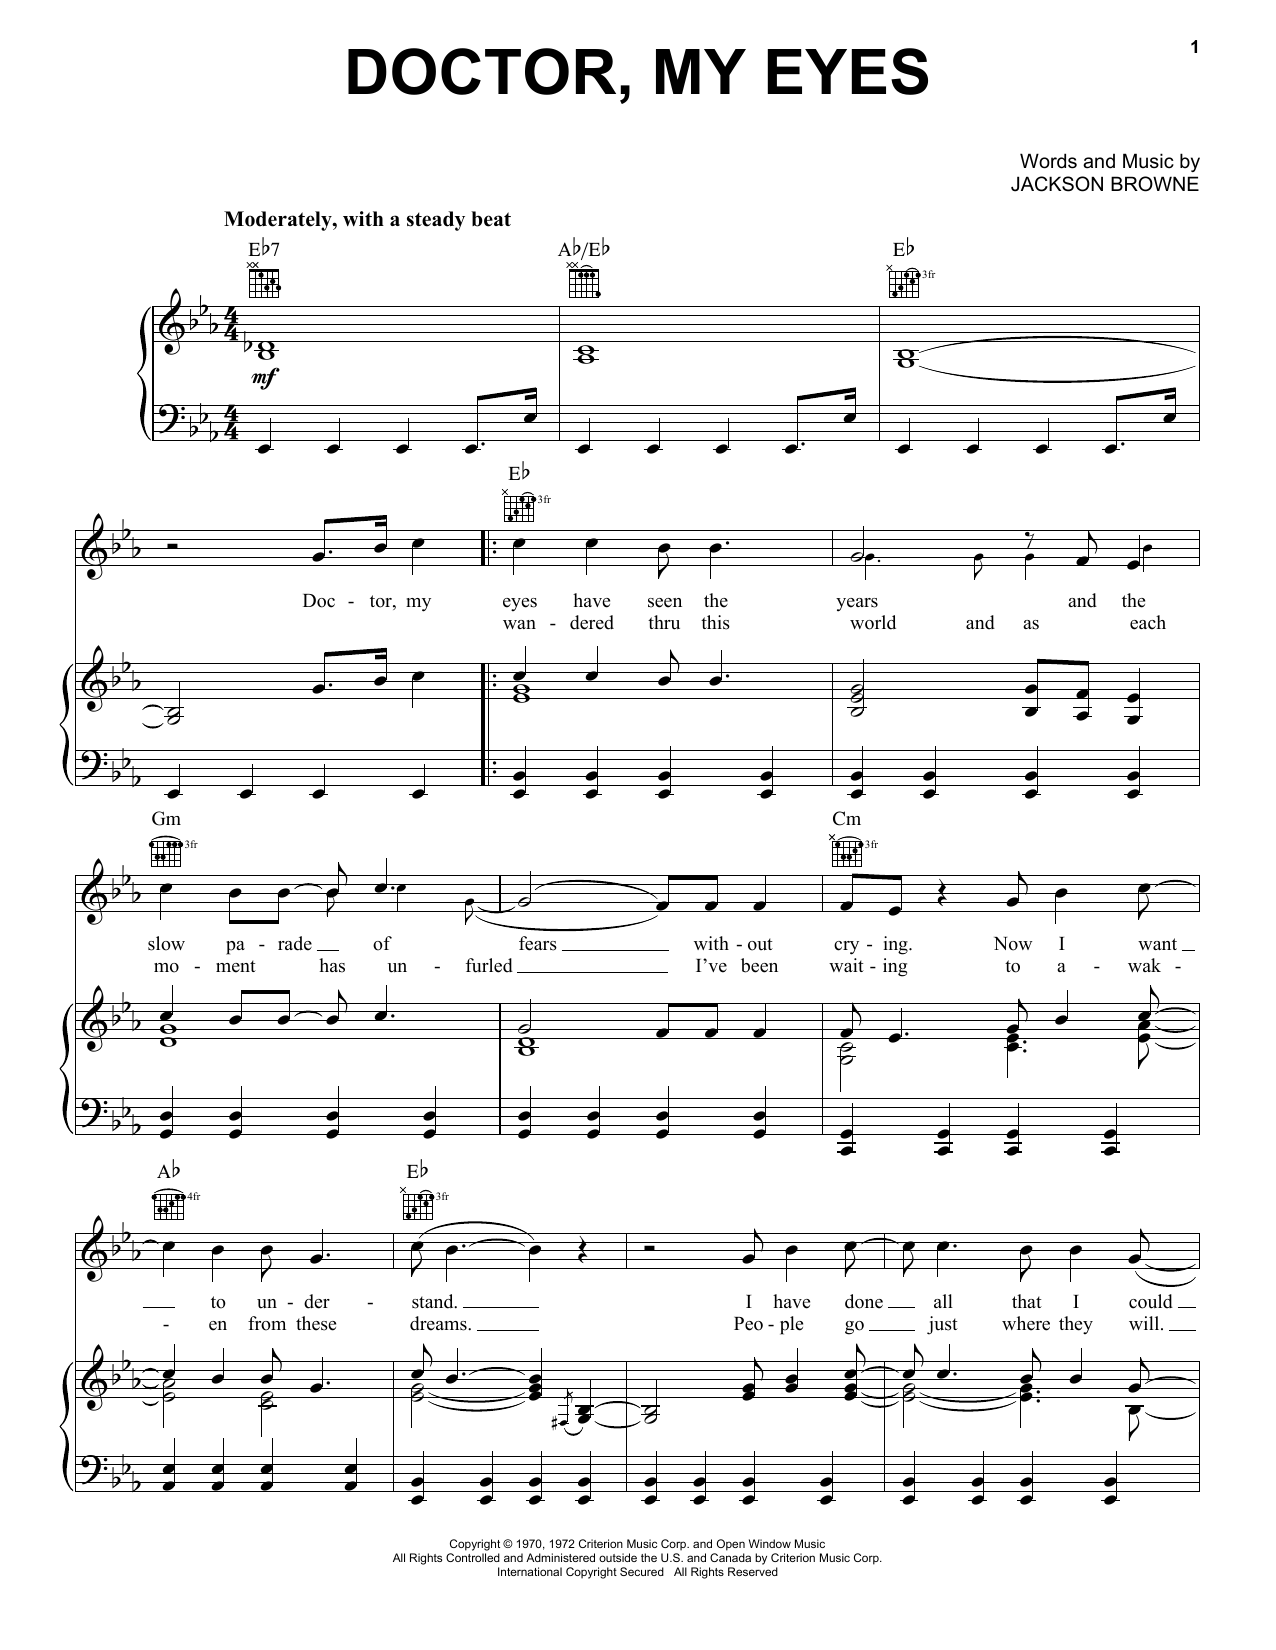 Jackson Browne Doctor, My Eyes Sheet Music Notes & Chords for Ukulele with strumming patterns - Download or Print PDF